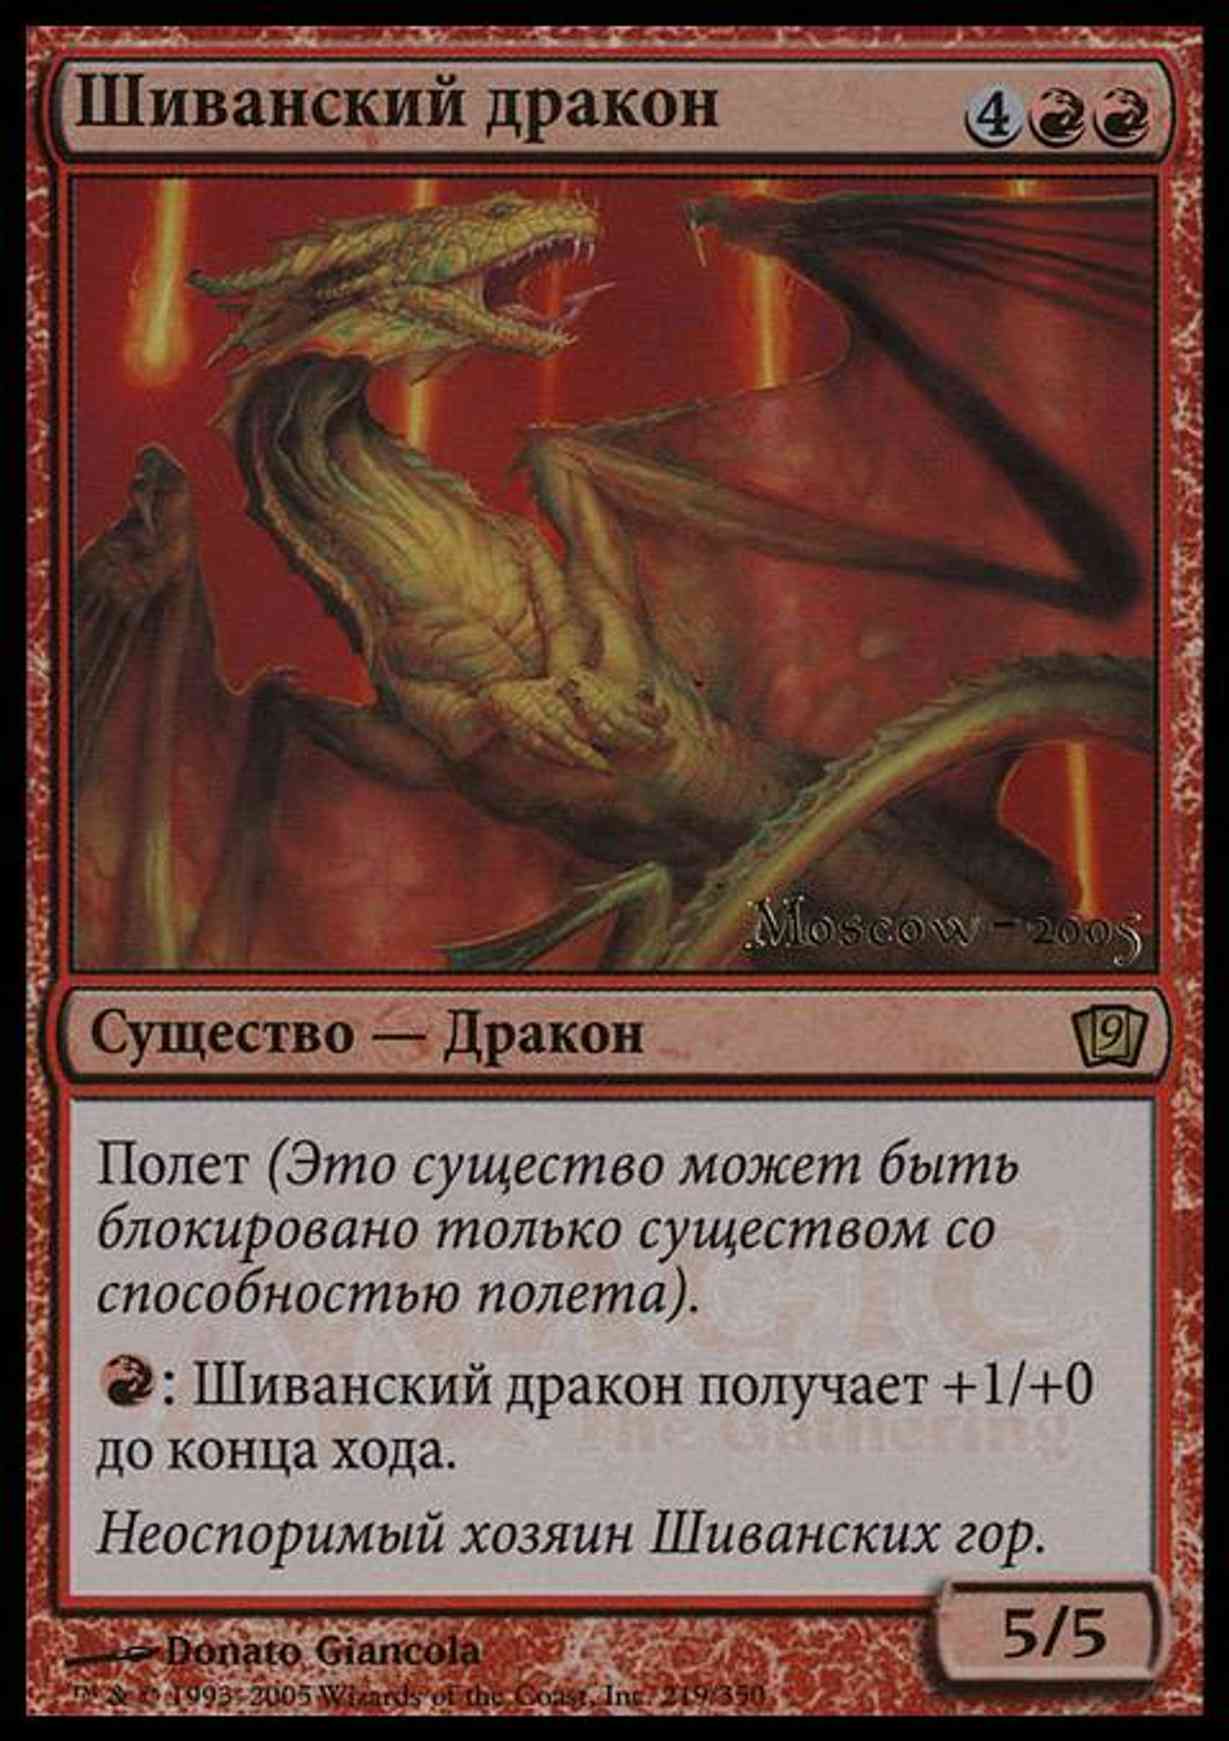 Shivan Dragon (Moscow 2005) magic card front